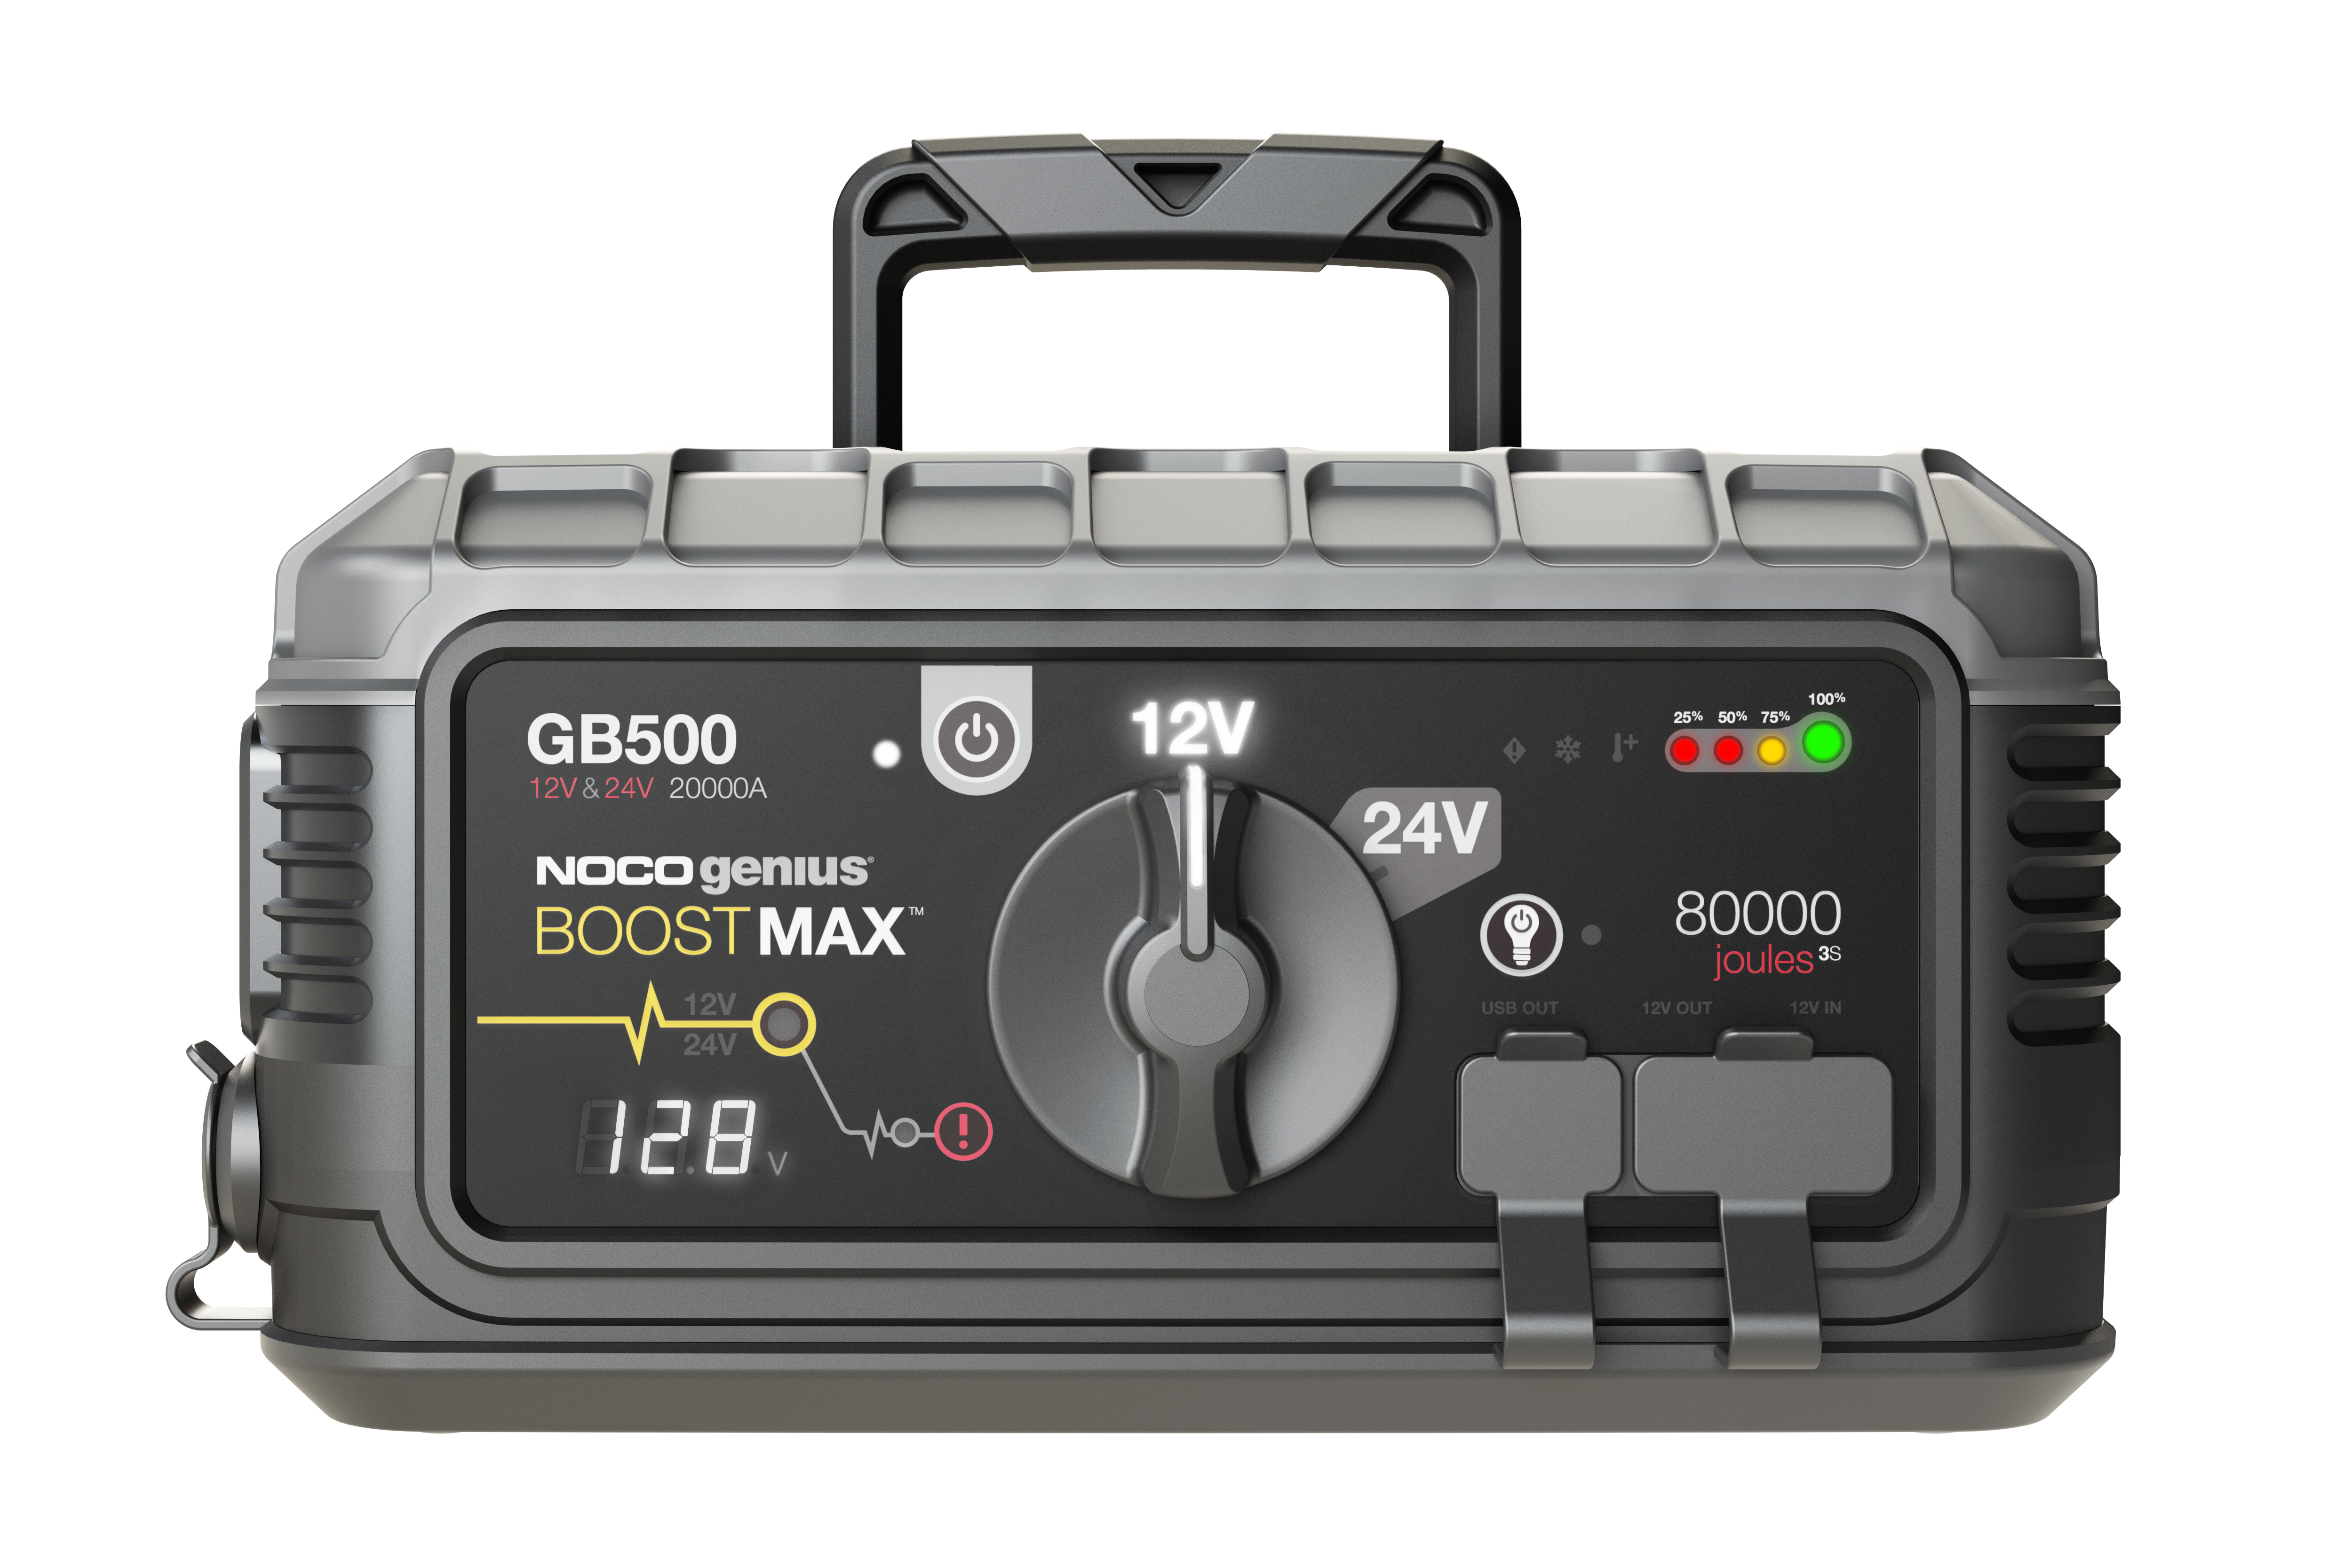 Noco Genius Boost Max GB500 12V and 24V jump starter